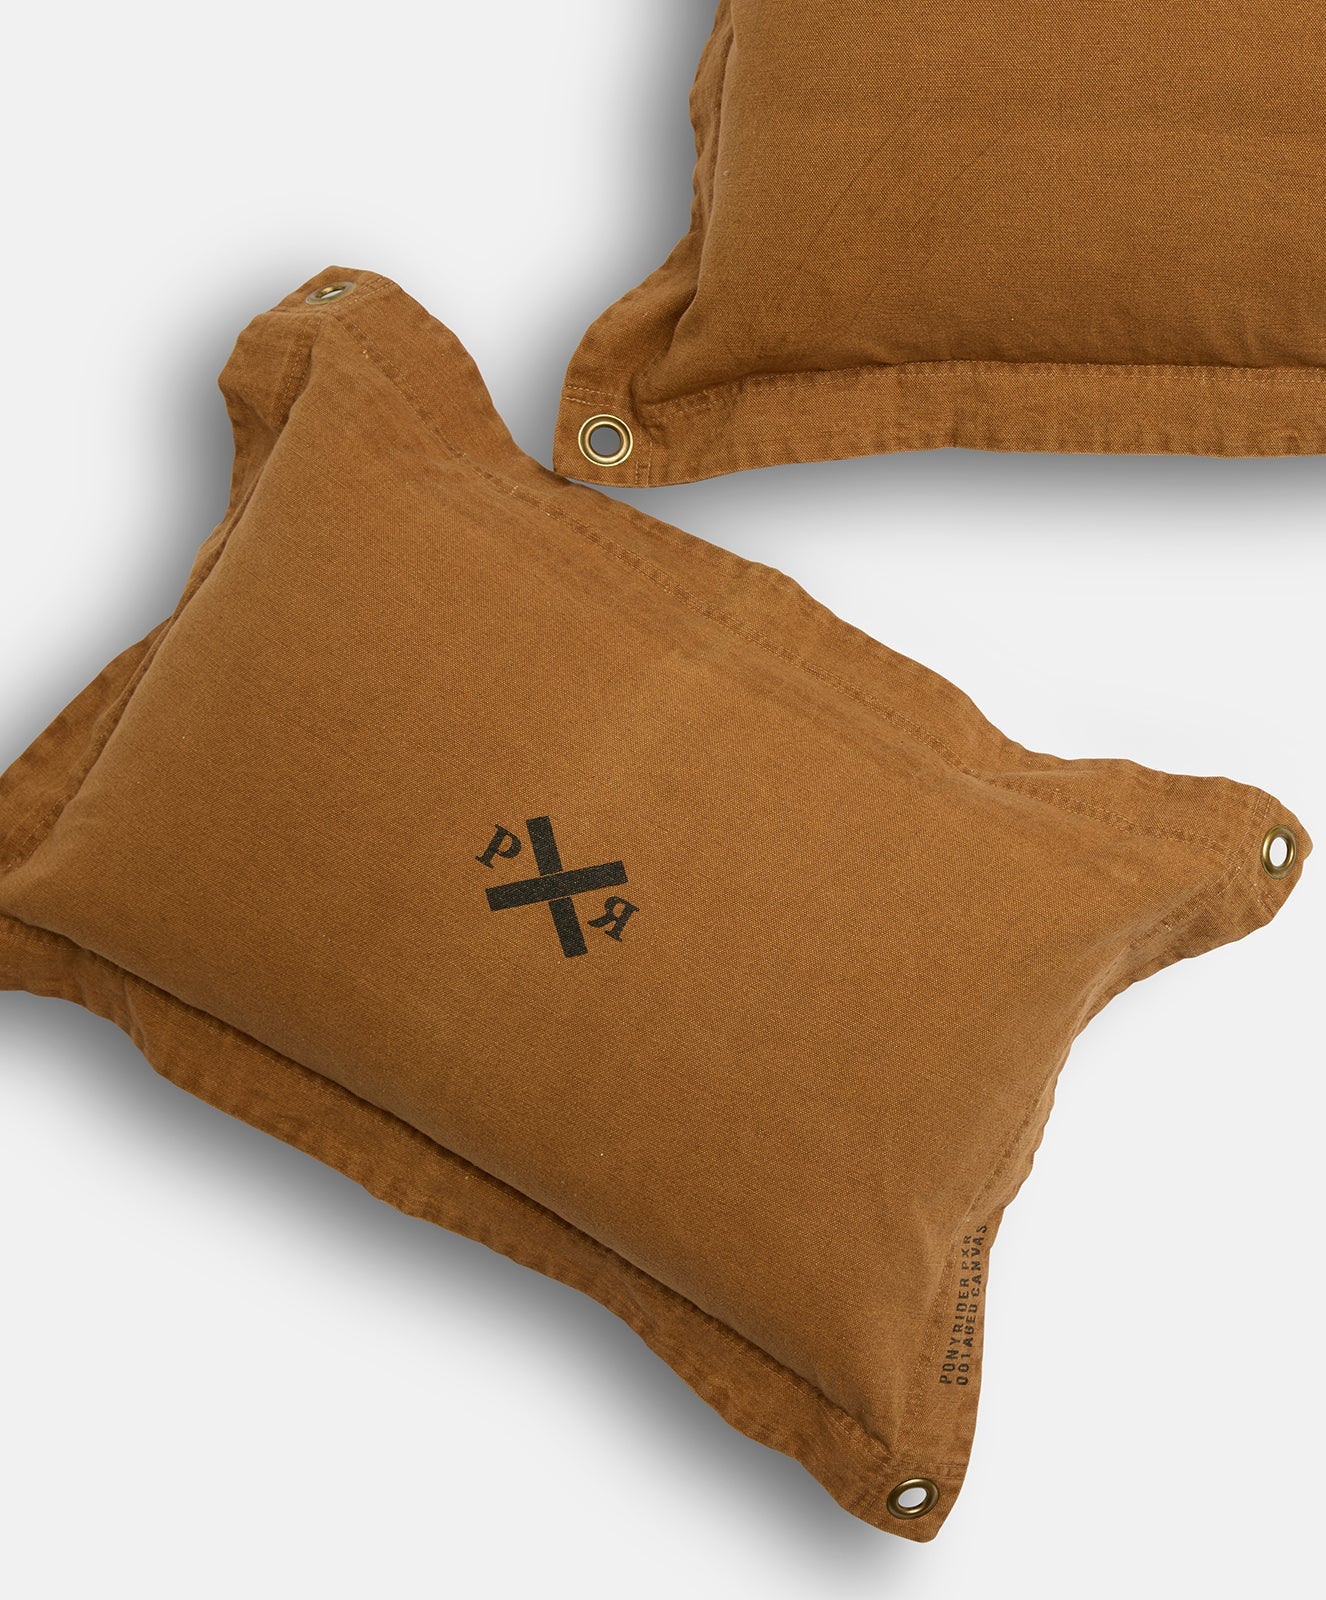 Lil Highlander Rectangle Cushion | Spice